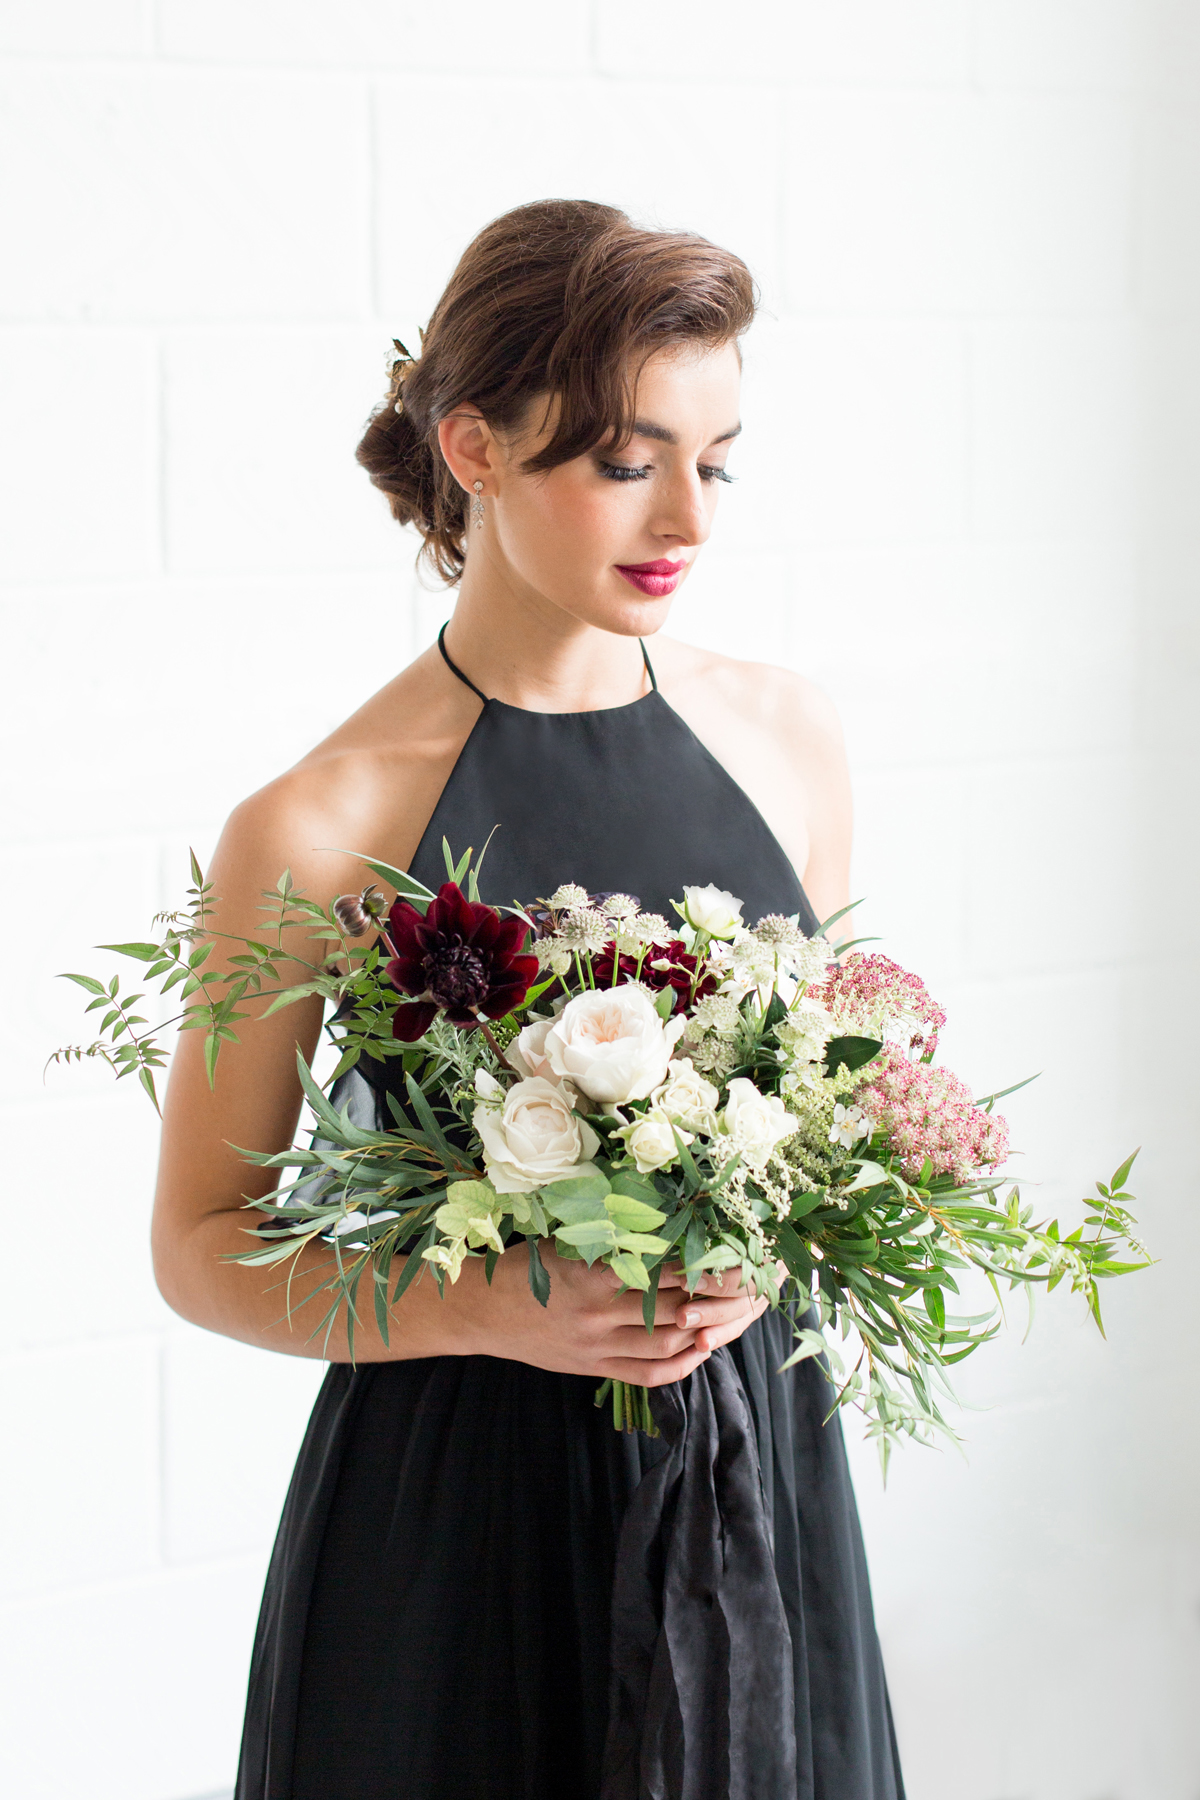 Black Bridesmaid Dress - Industrial Warehouse Wedding -- The Overwhelmed Bride - Wedding Blog